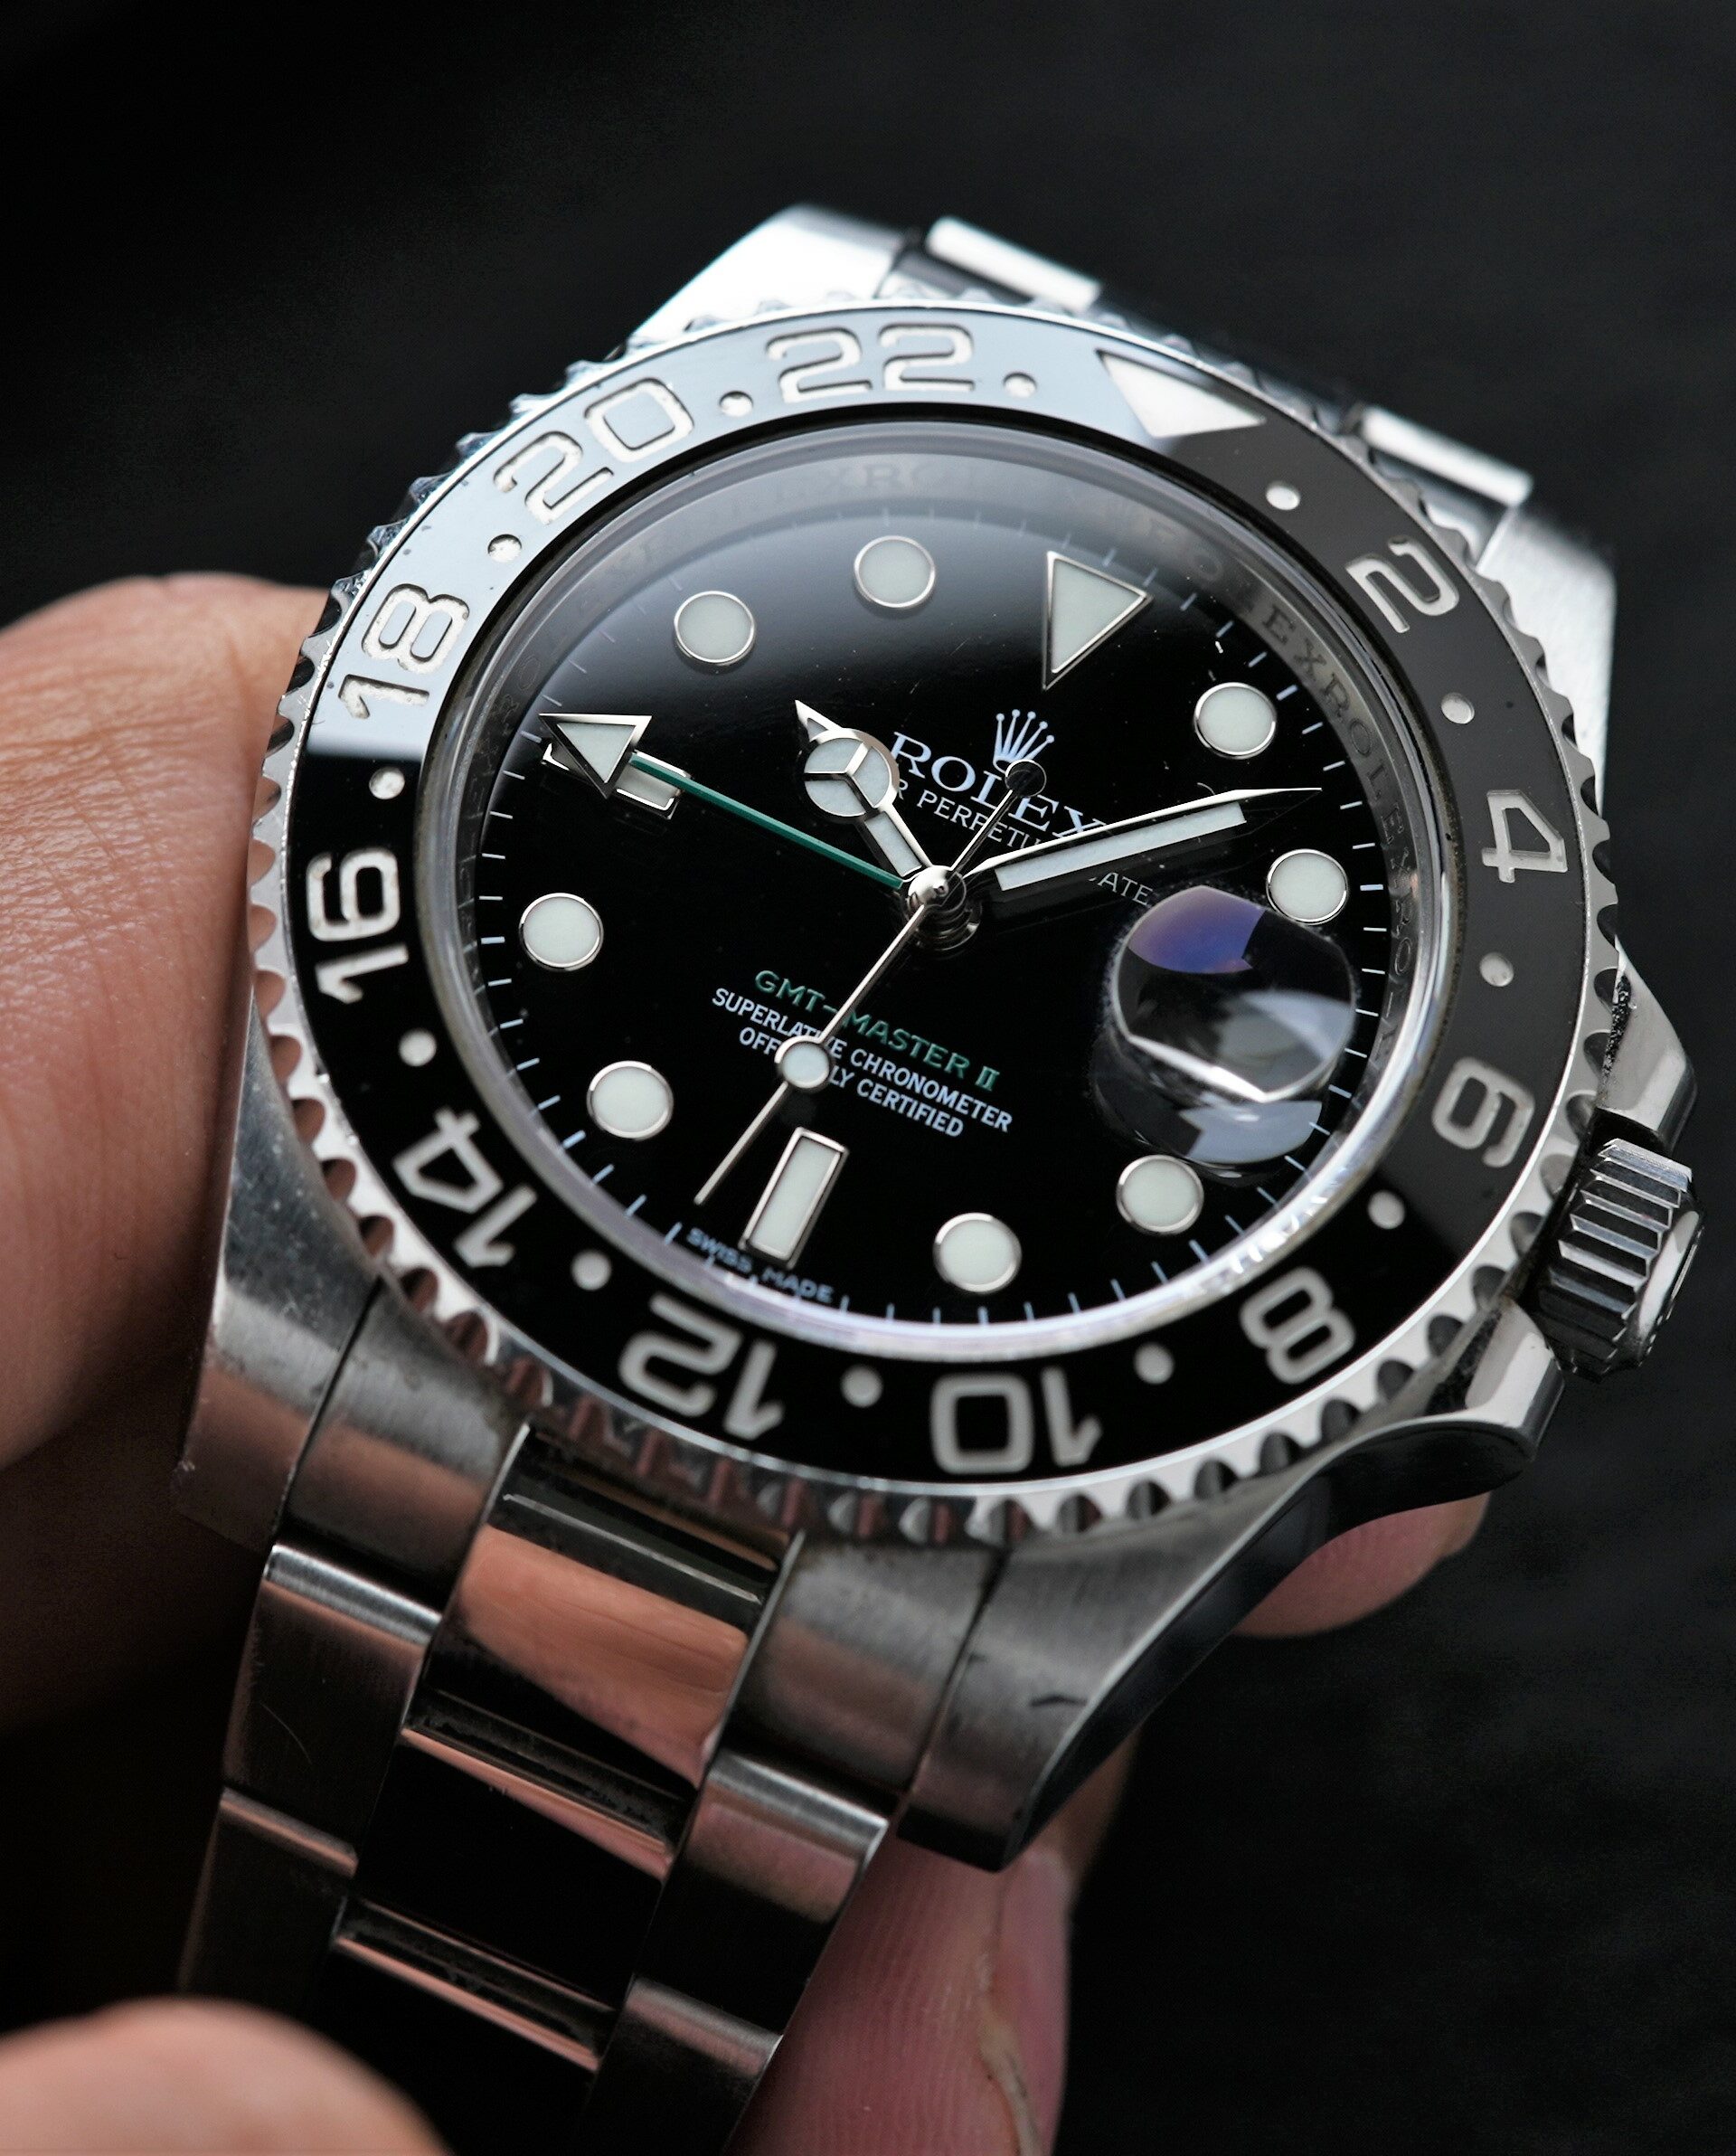 Rolex GMT-Master II Black Discontinued 116710LN wristwatch displayed in hand.